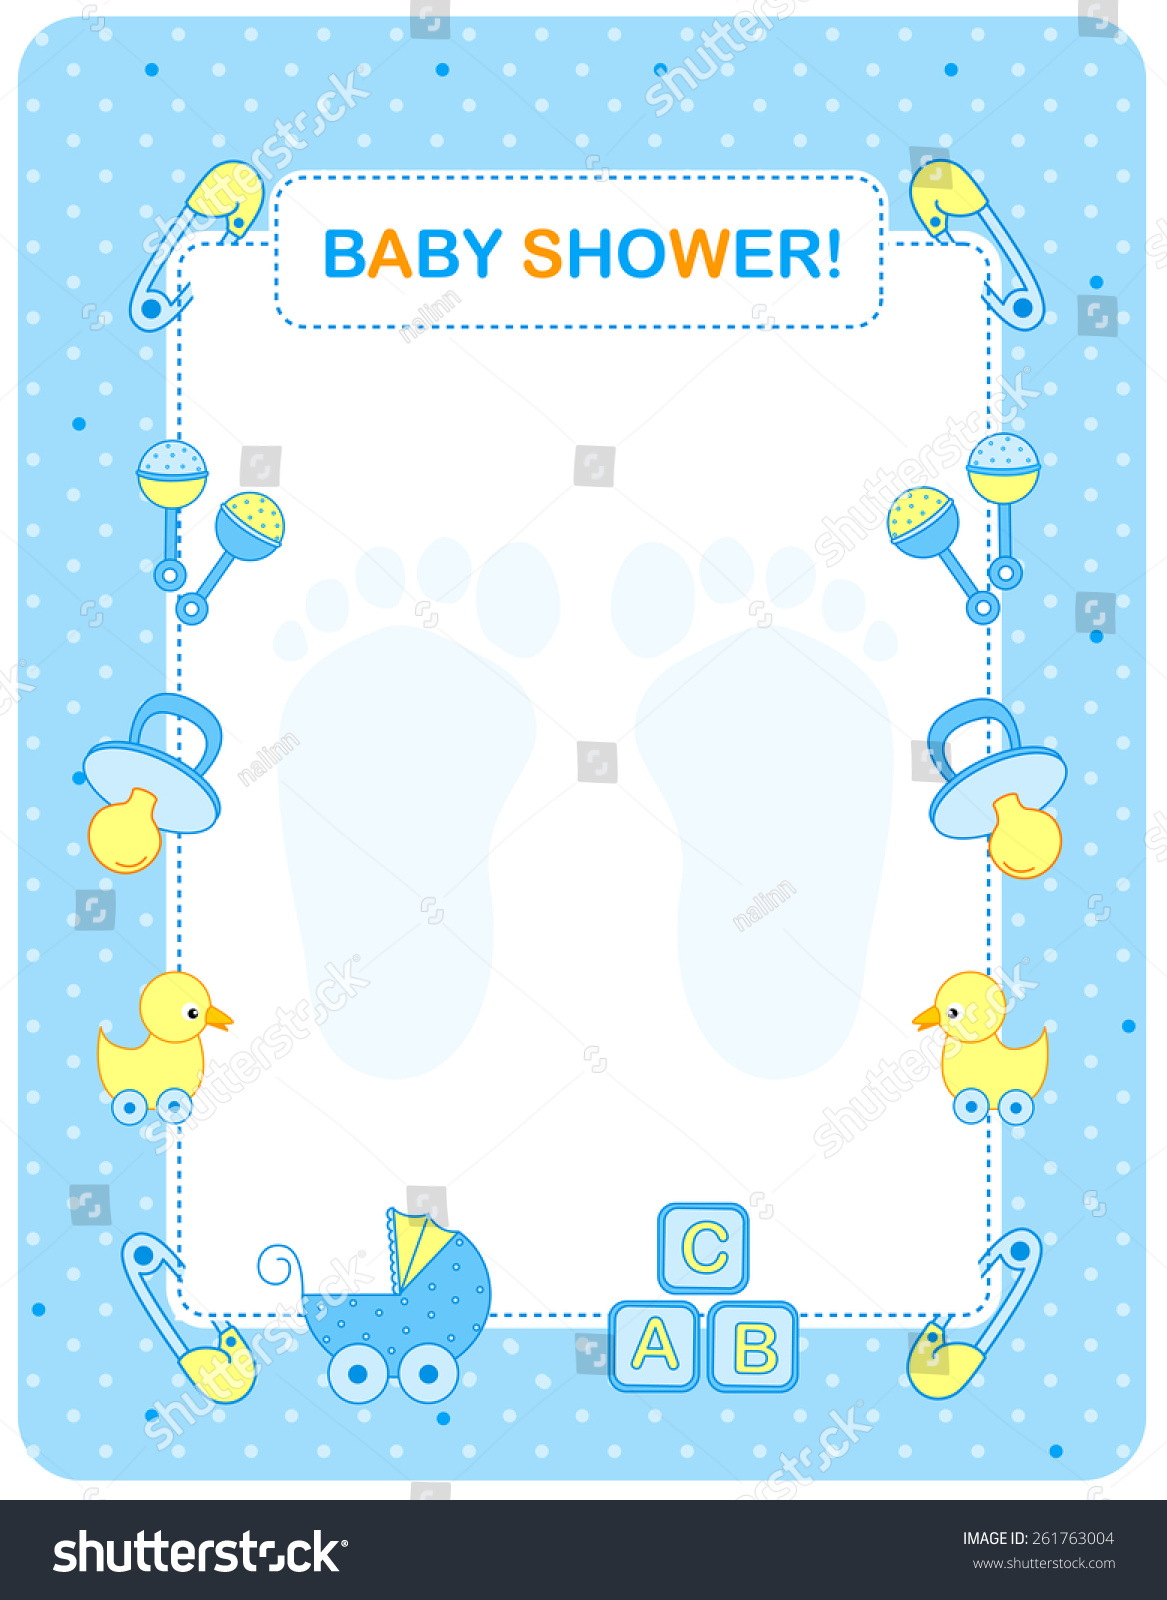 baby shower invitation border clip art - photo #48